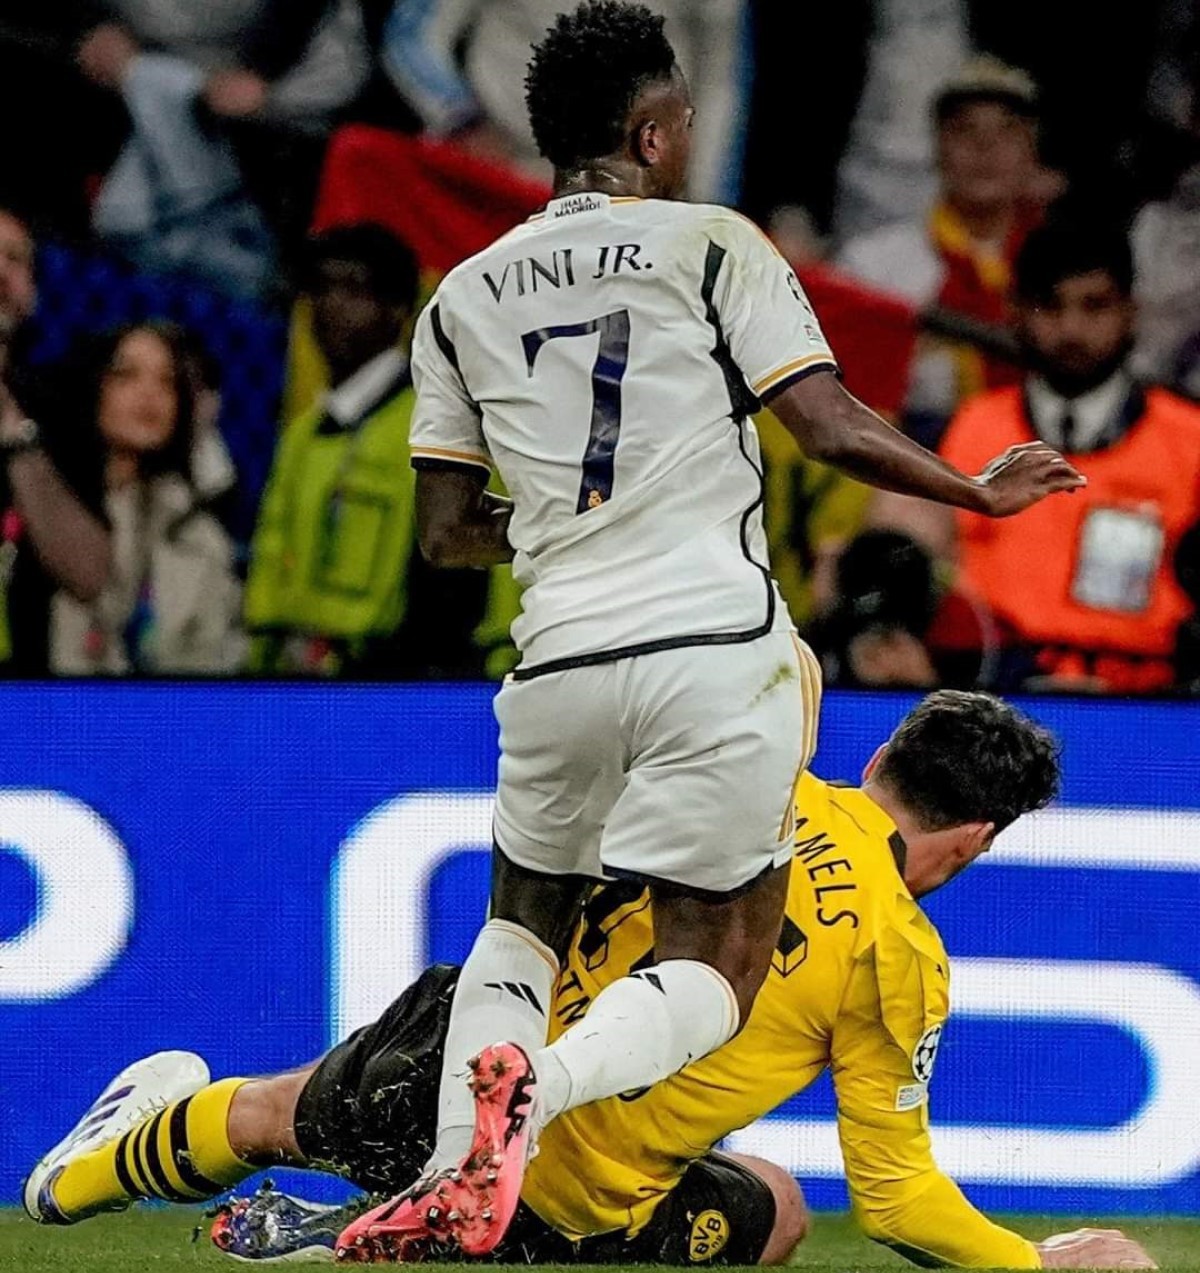 Hummels Borussia Dortmund-Real Madrid (0-2): analisi tattica e considerazioni